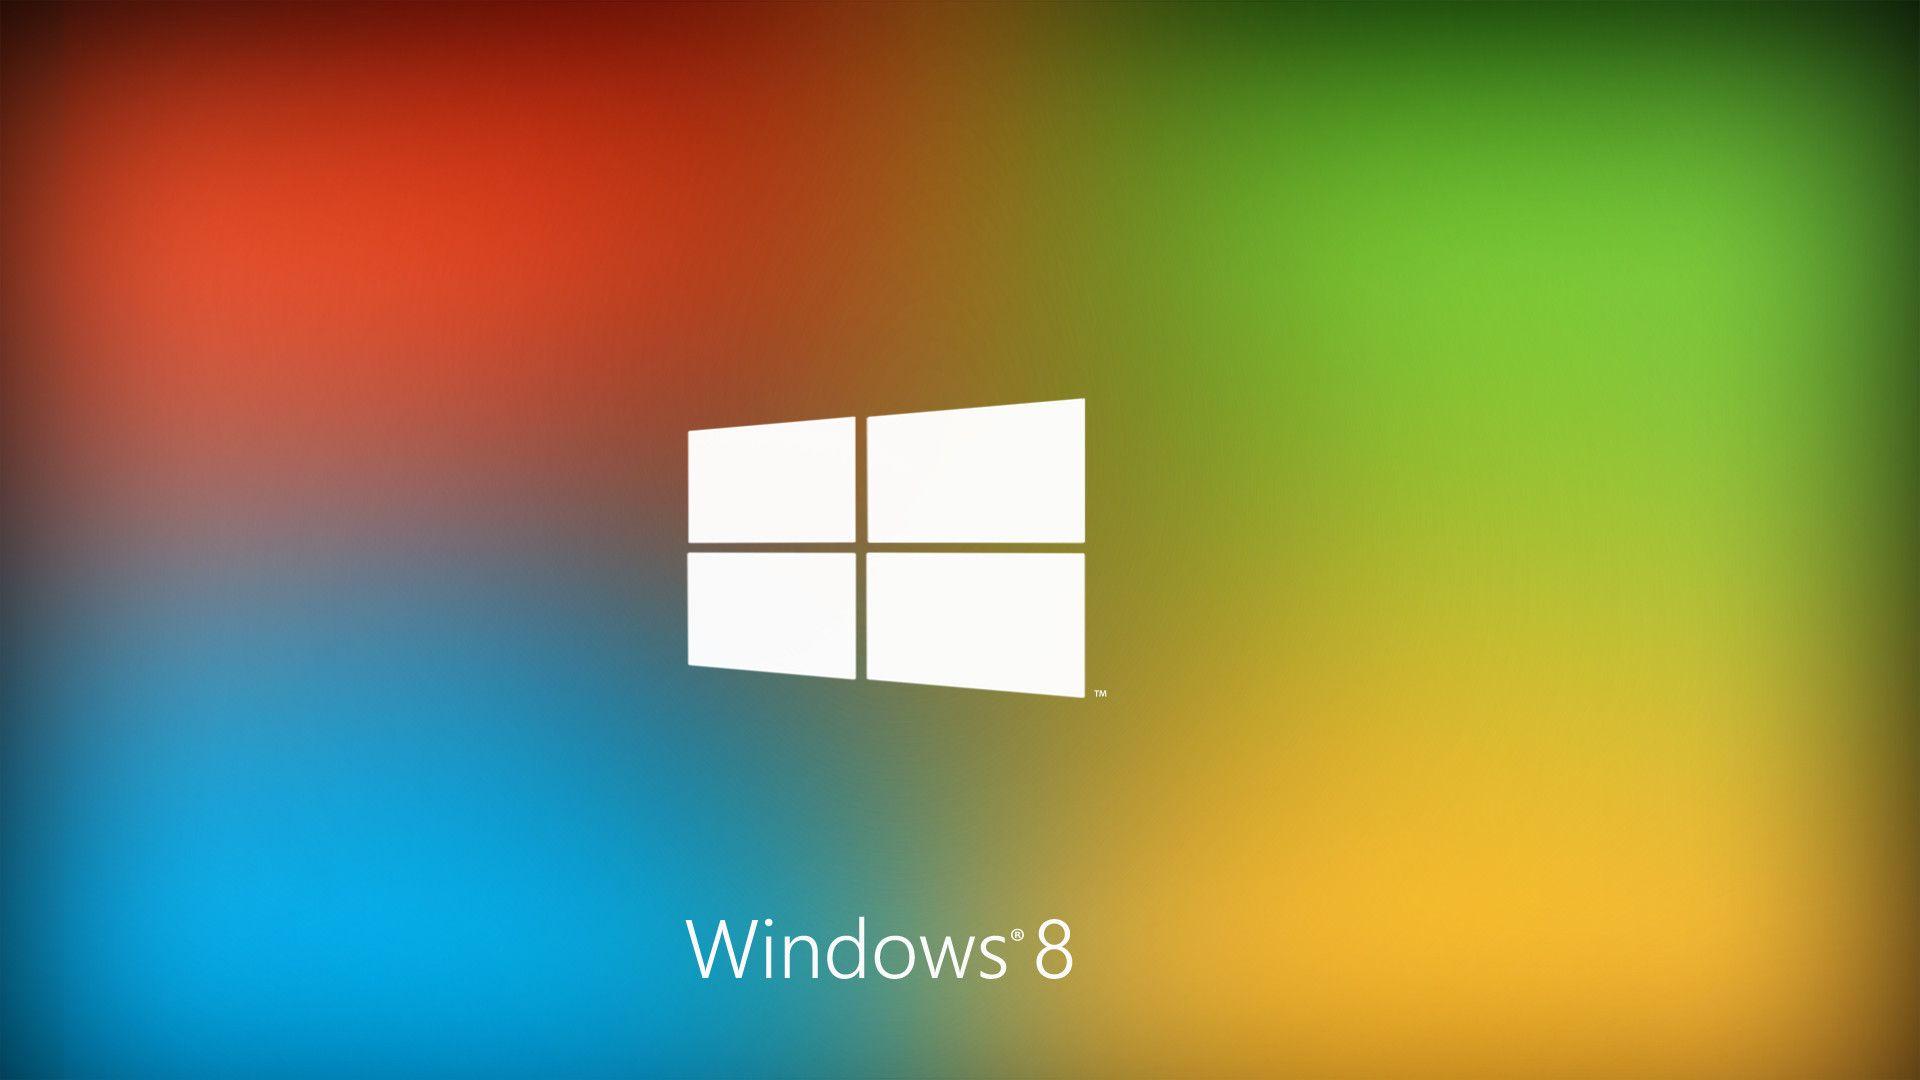 Windows 8 Desktop Picture HD Windows 8 Wallpaper, Free